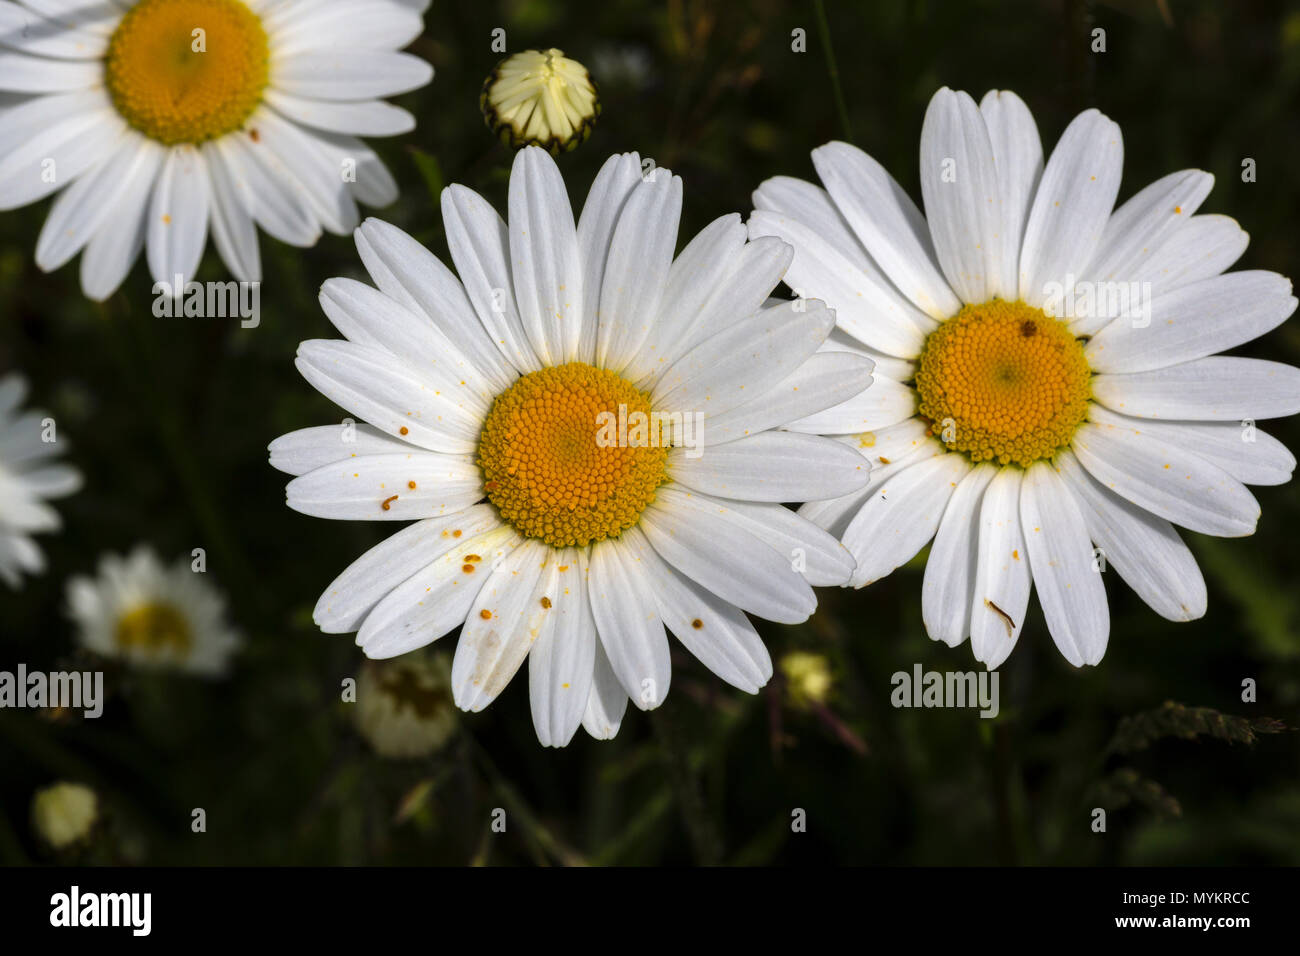 Daisy flowers growing wild in garden Stock Photo